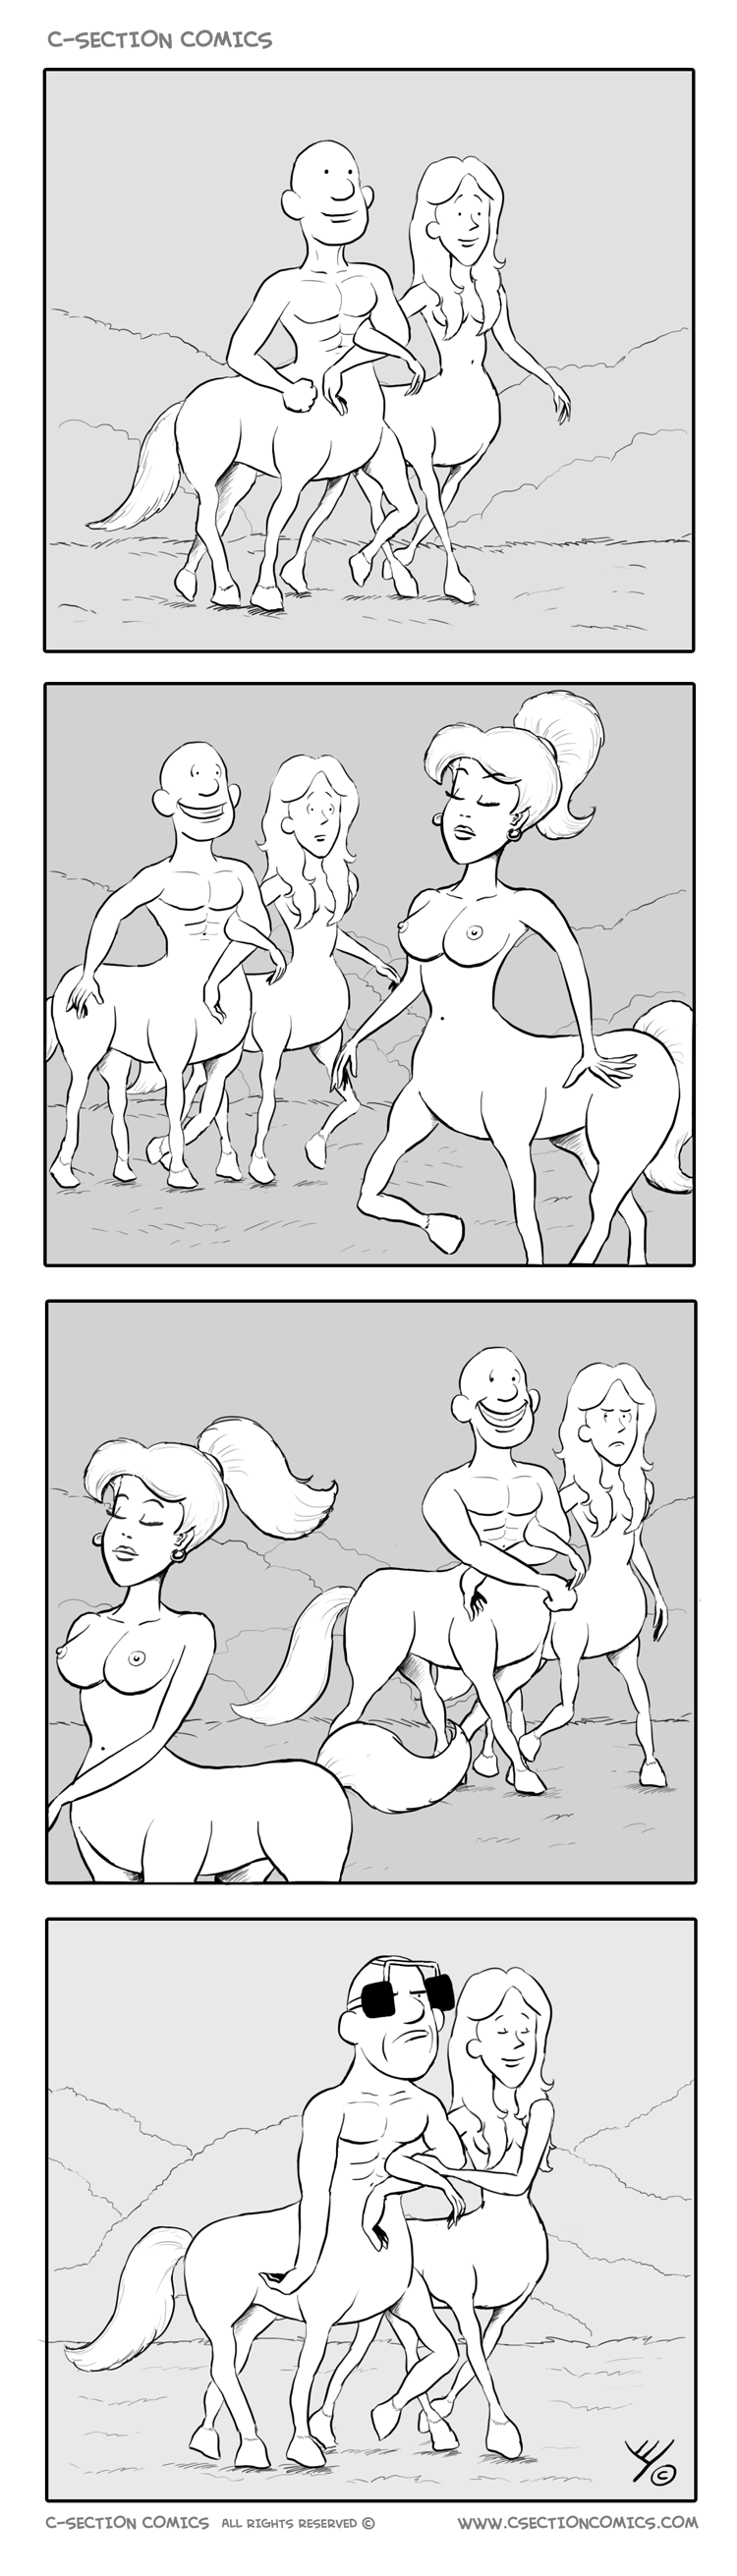 Centaur Love - by C-Section Comics